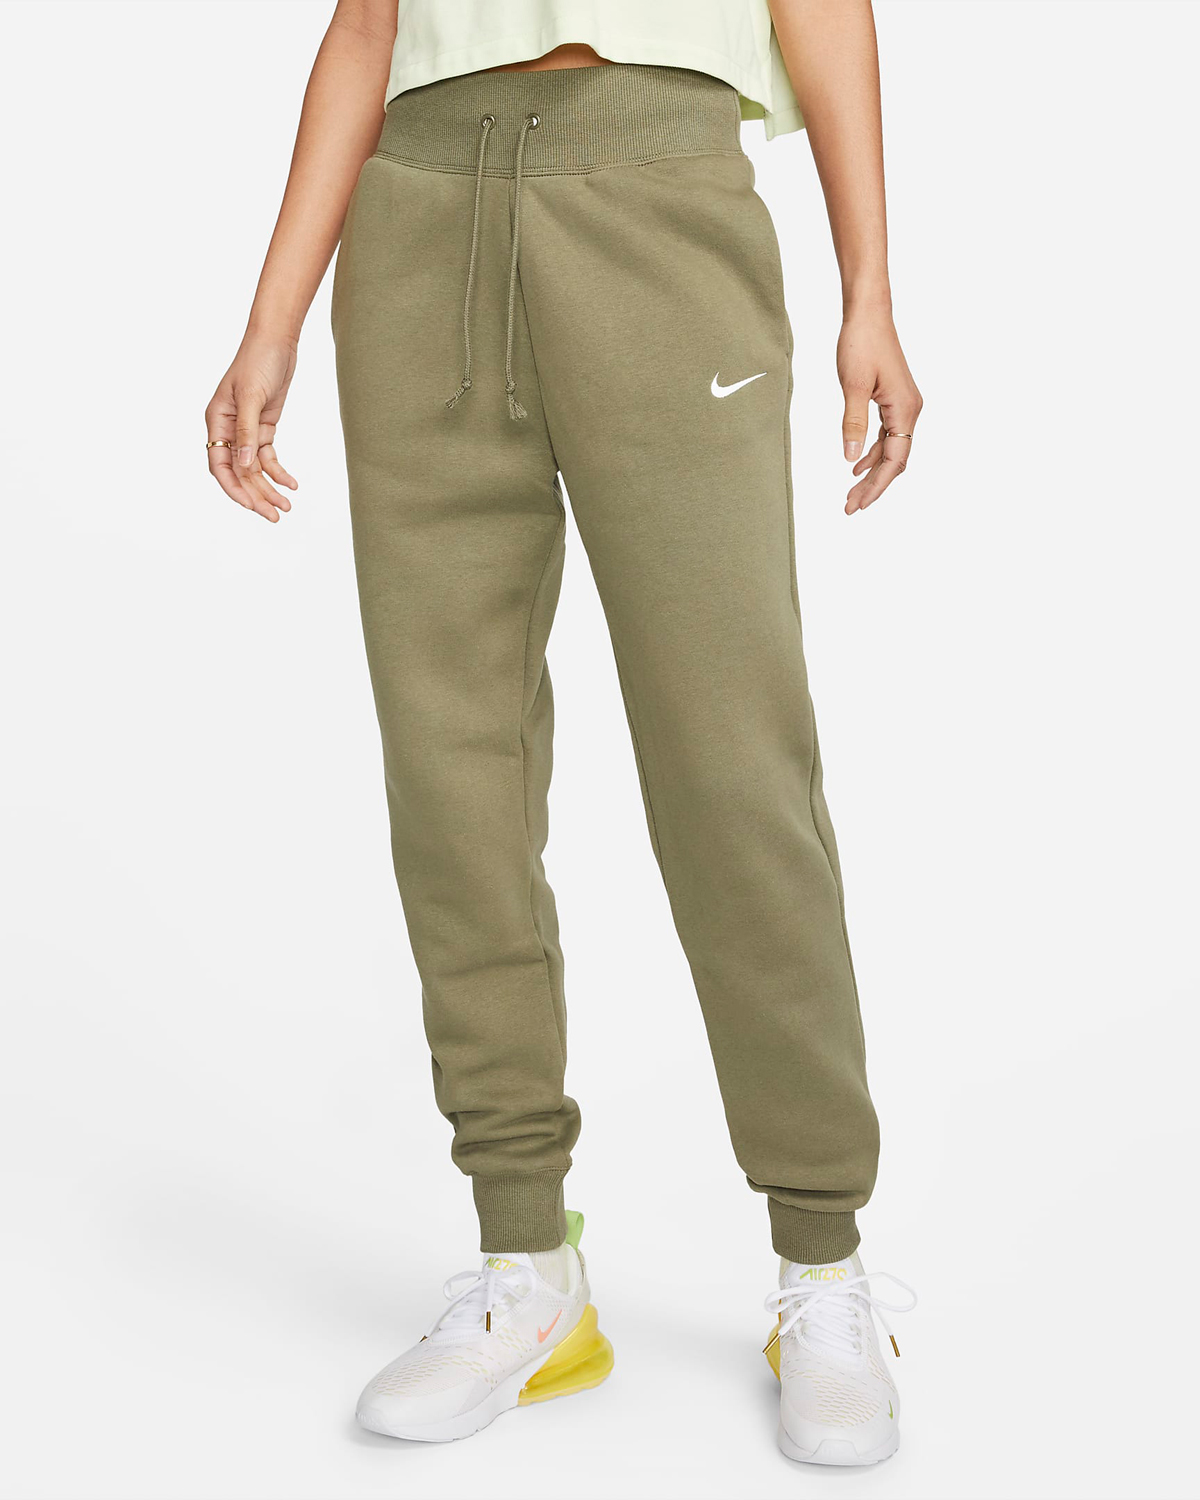 Nike-Sportswear-Phoenix-Womens-Jogger-Pants-Medium-Olive